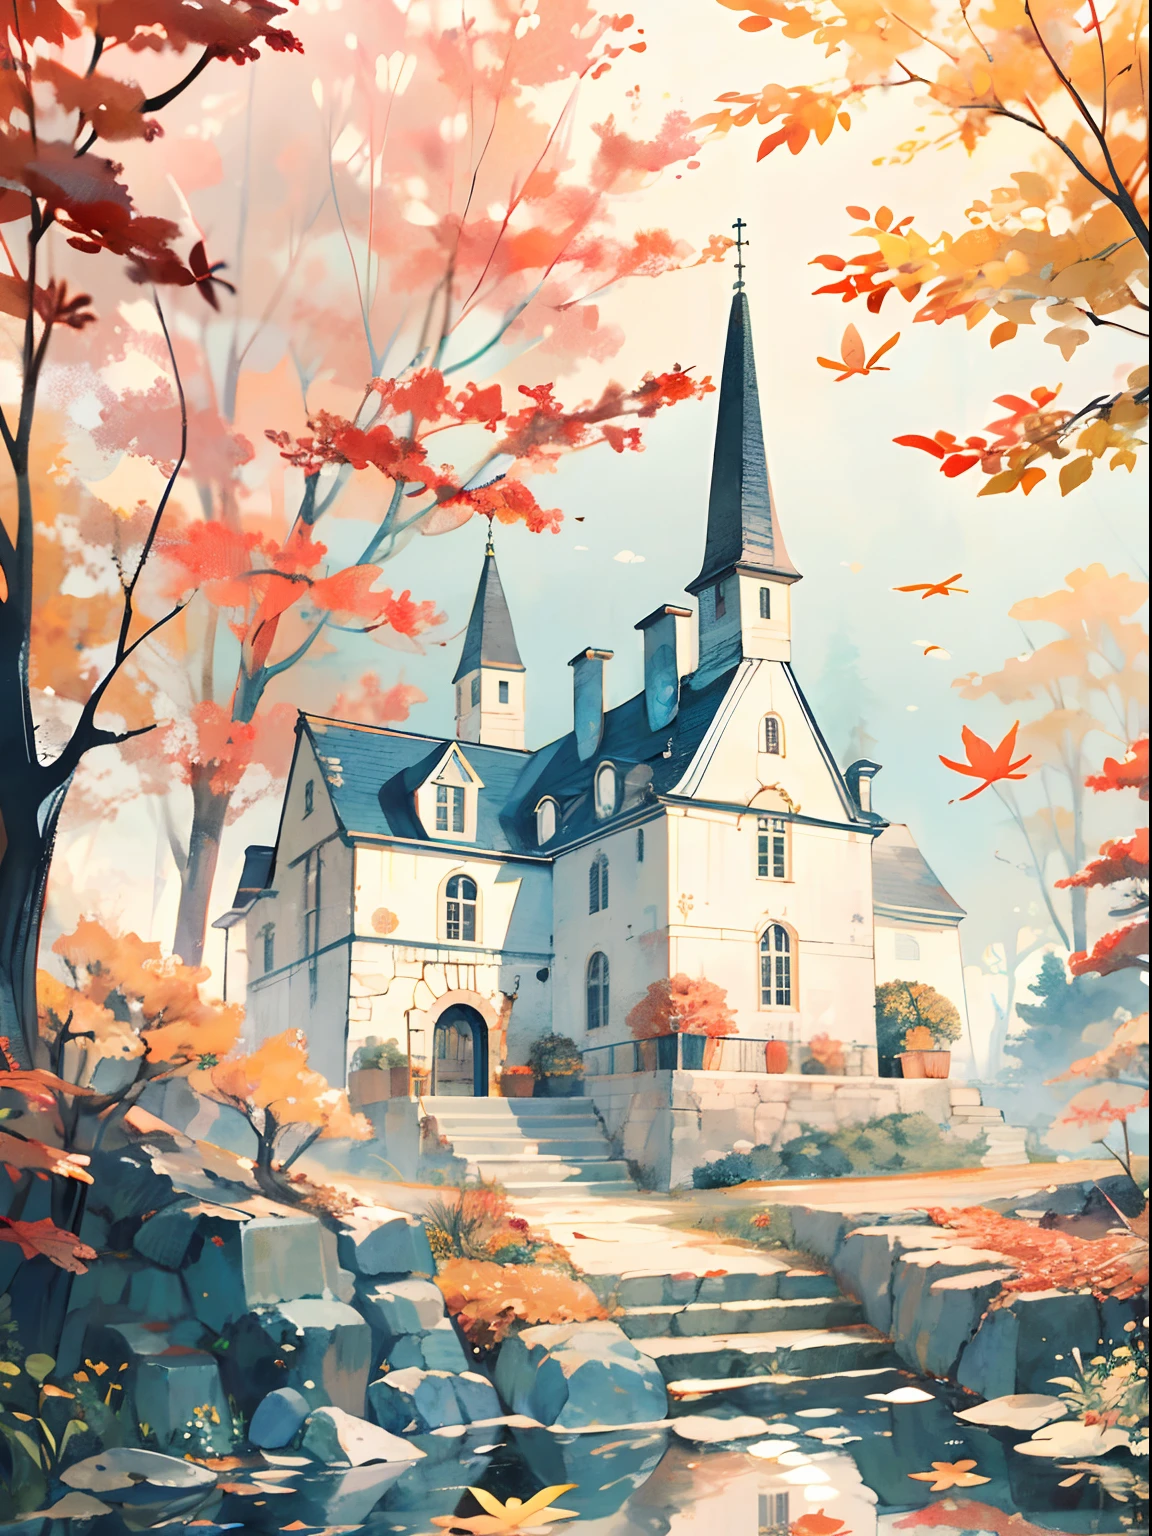 (((masterpiece))),best quality, whitetown, autumn scenery